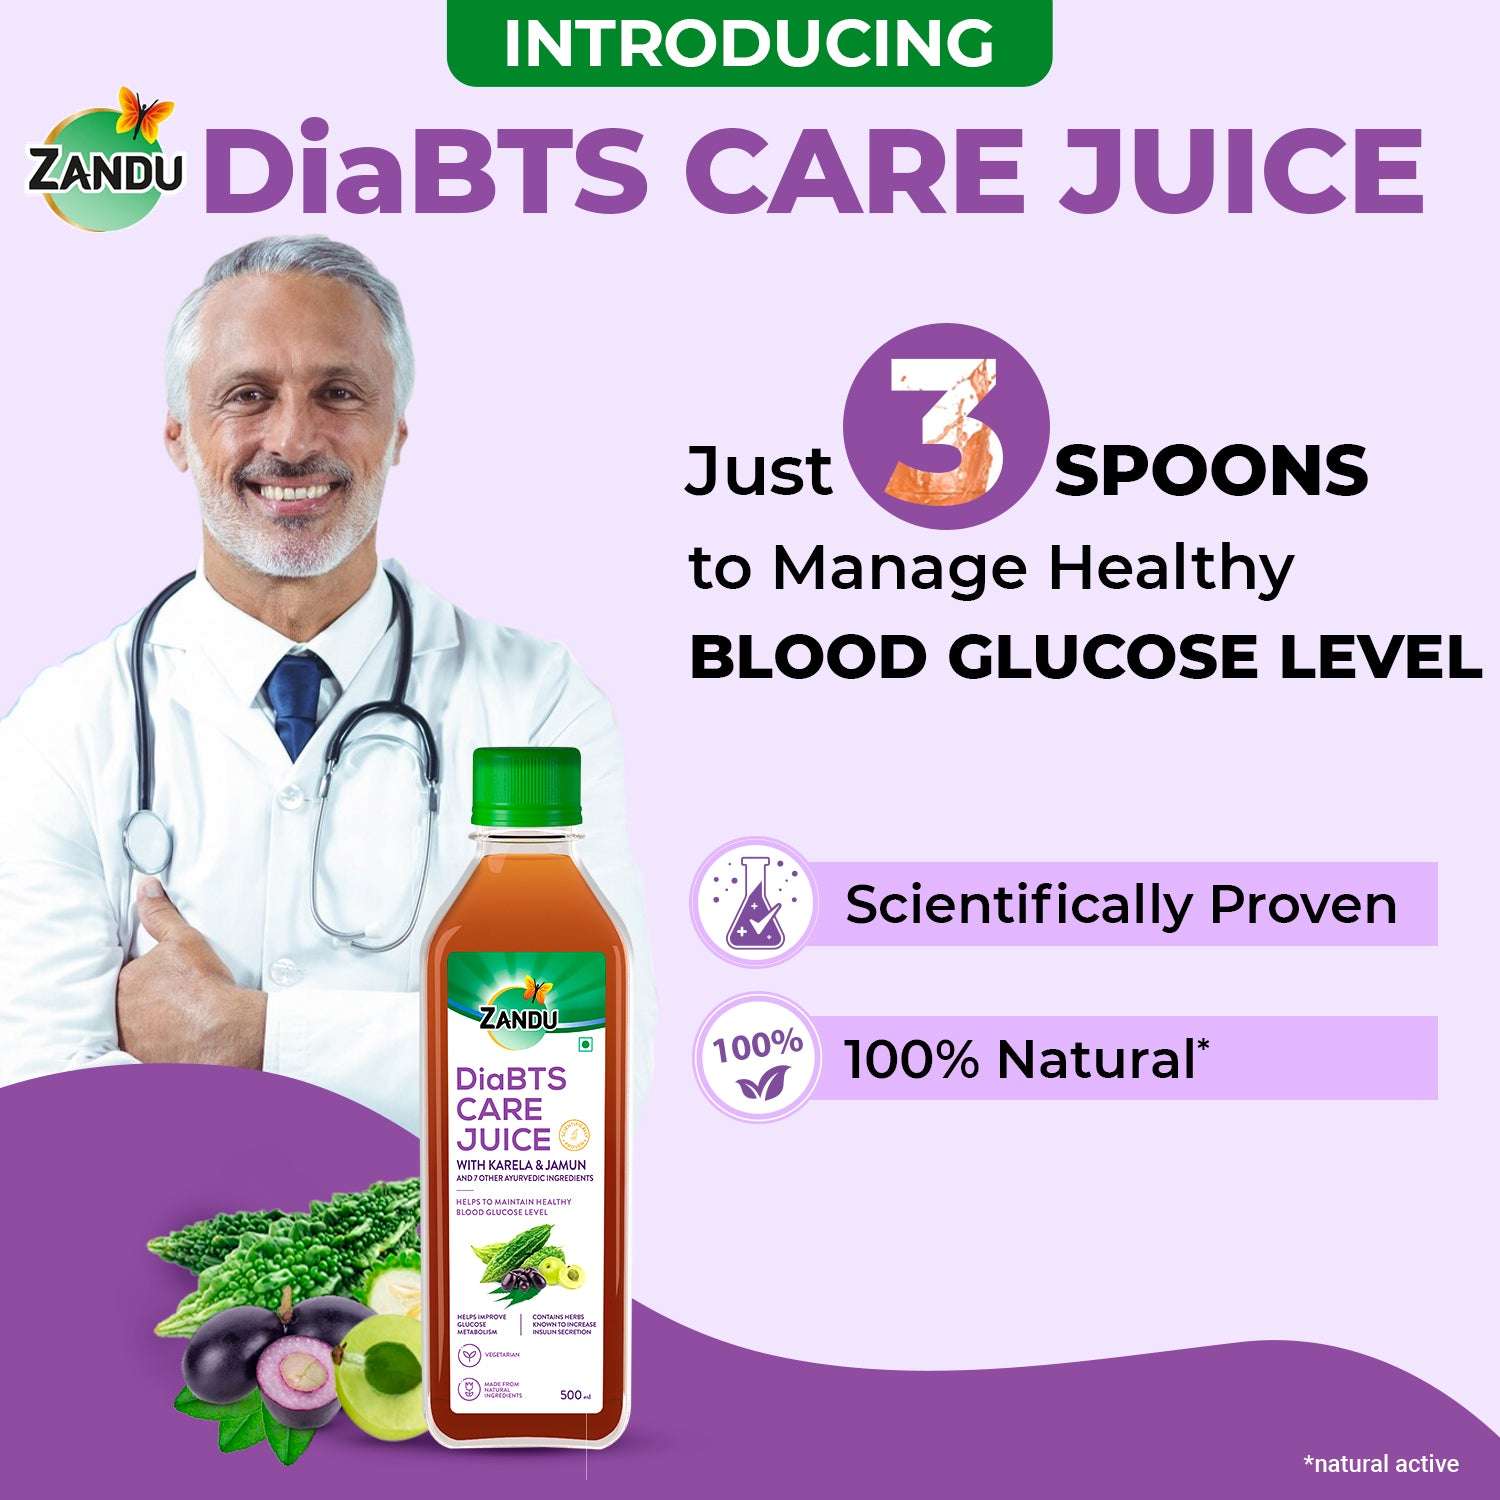 Zandu diabts care juice for sugar level management